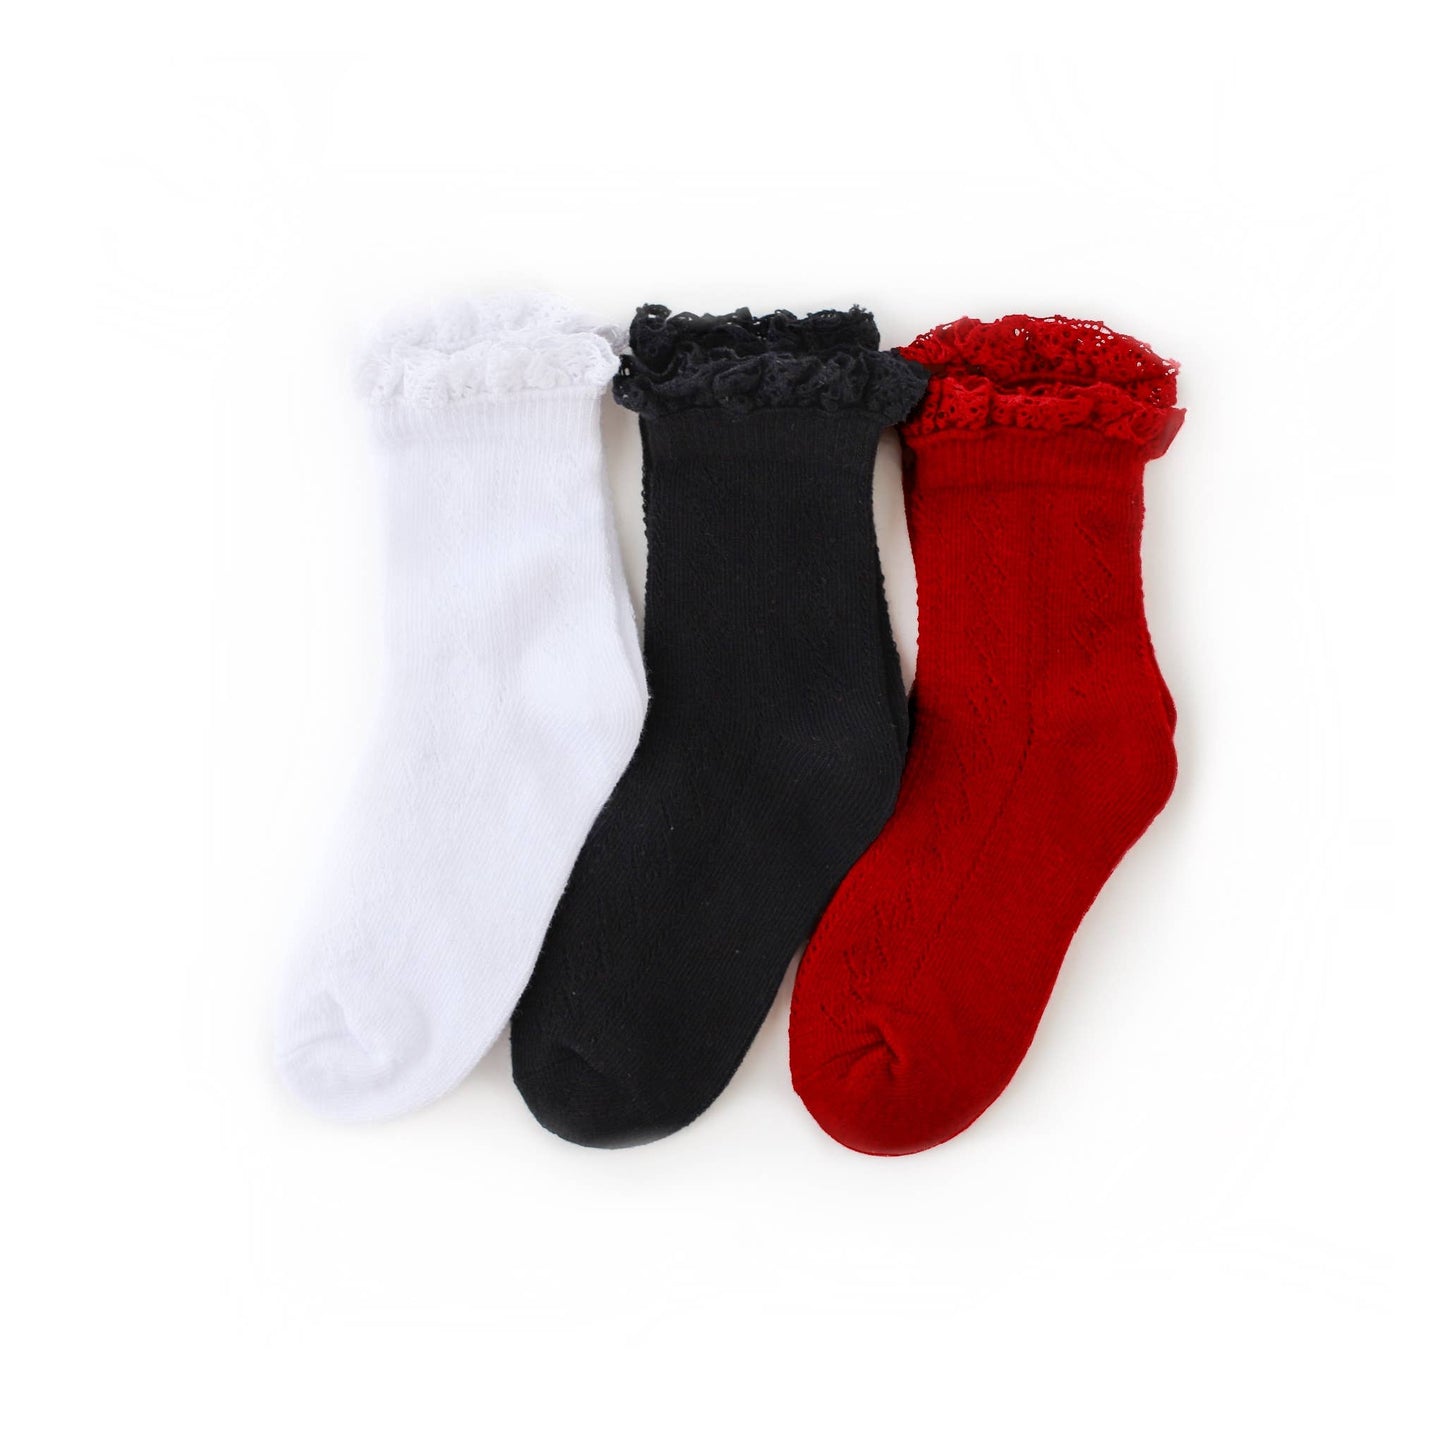 Little Stocking Co. lace midi socks 3-pack